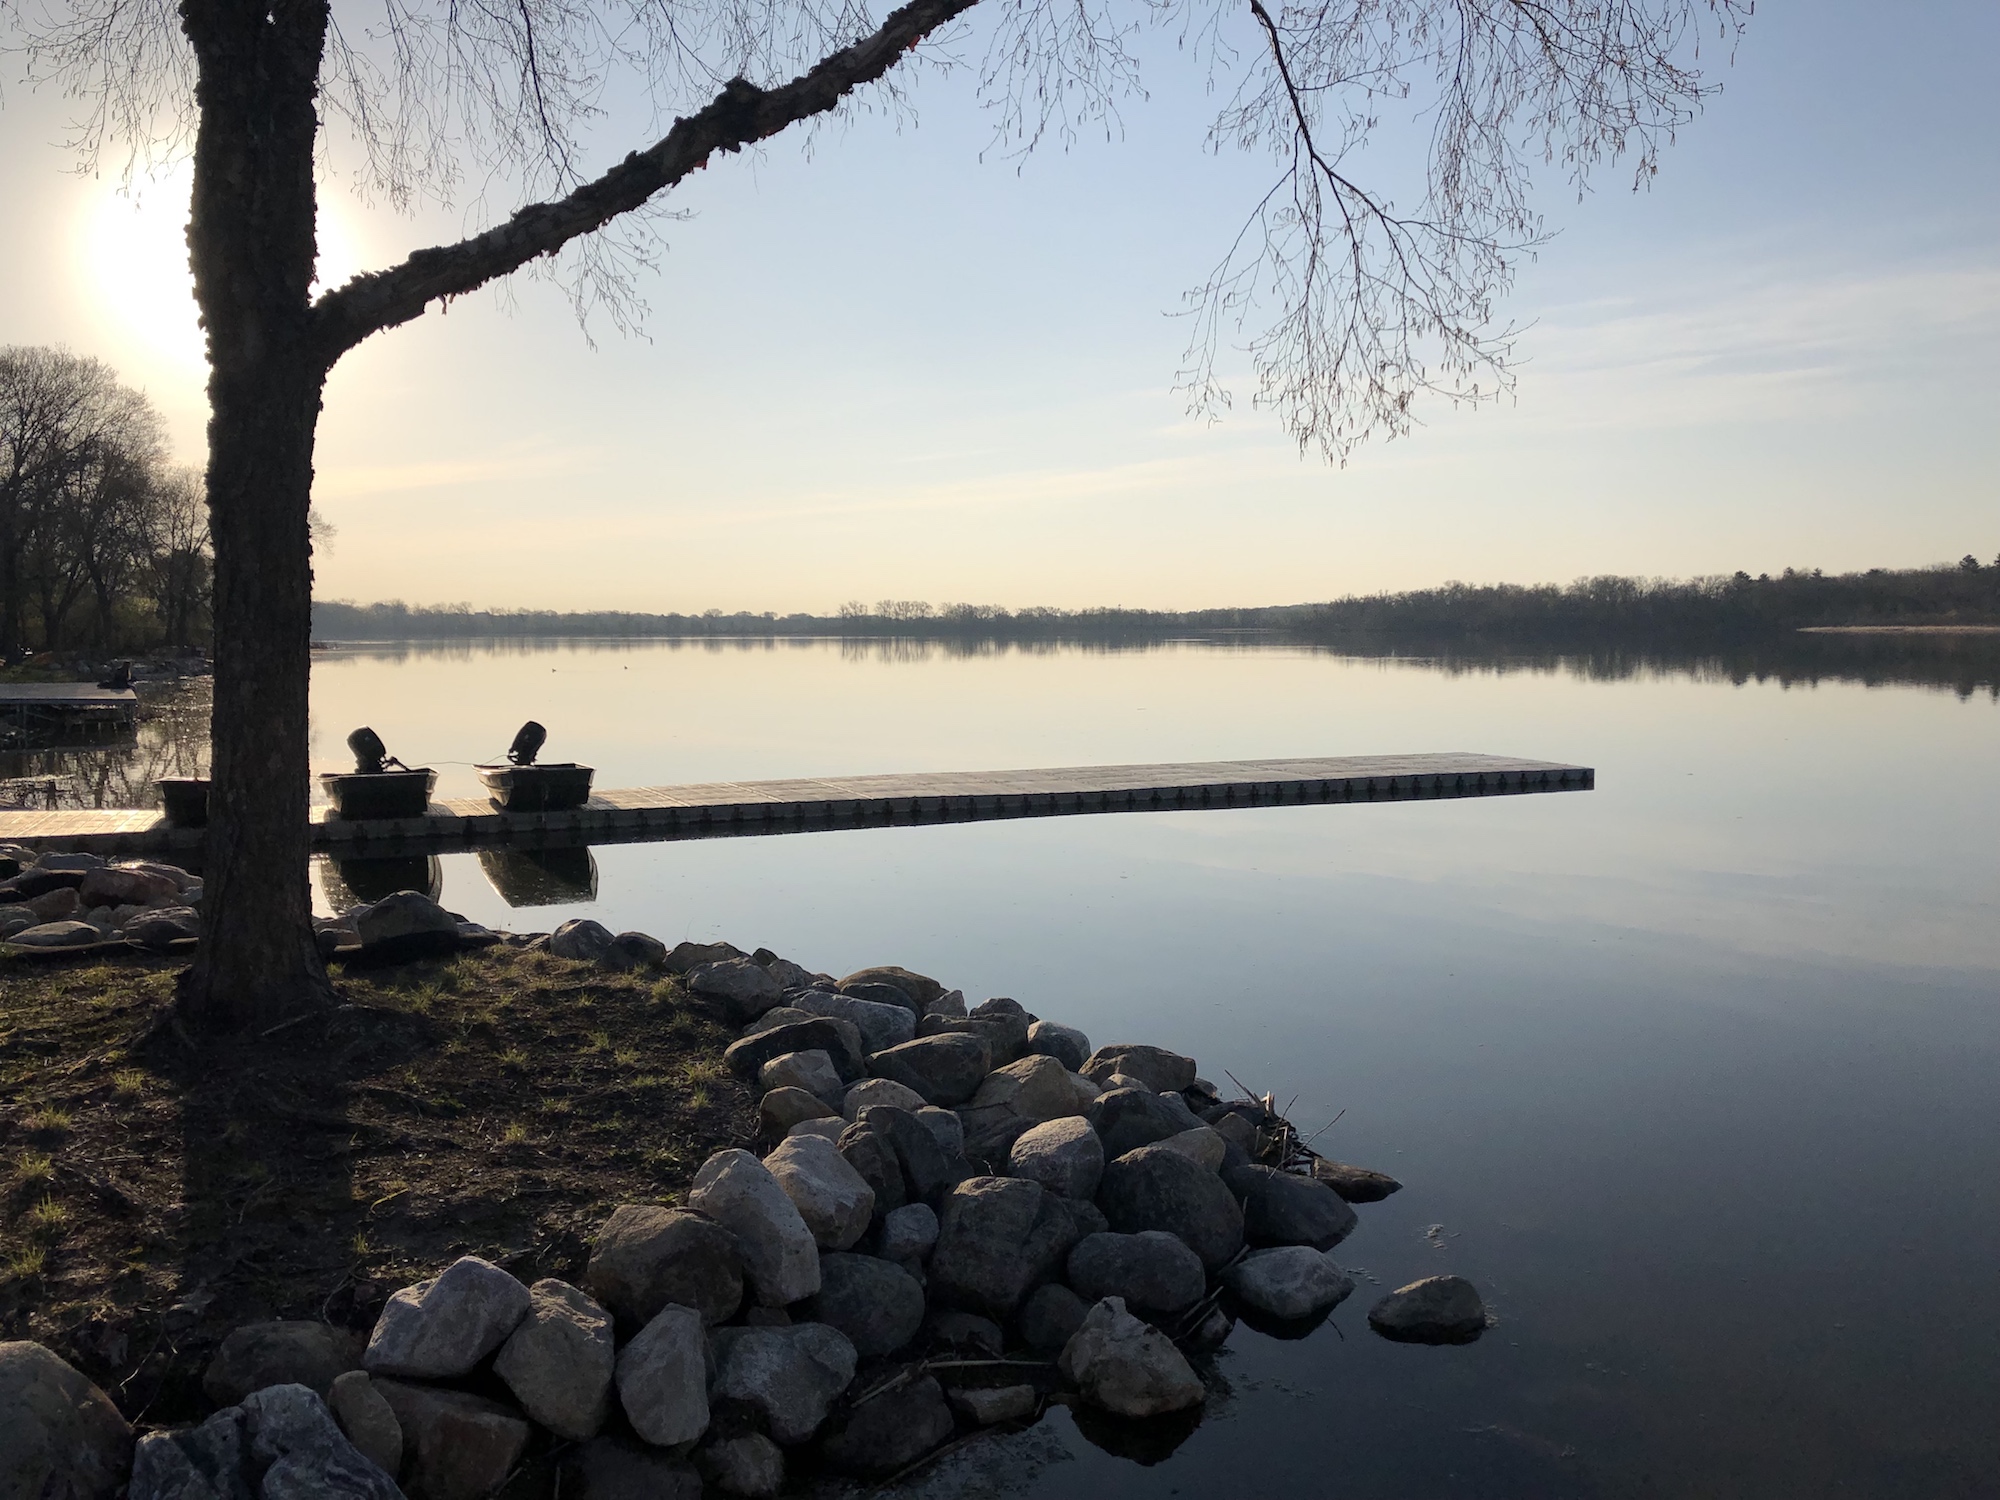 Lake Wingra on April 25, 2019.